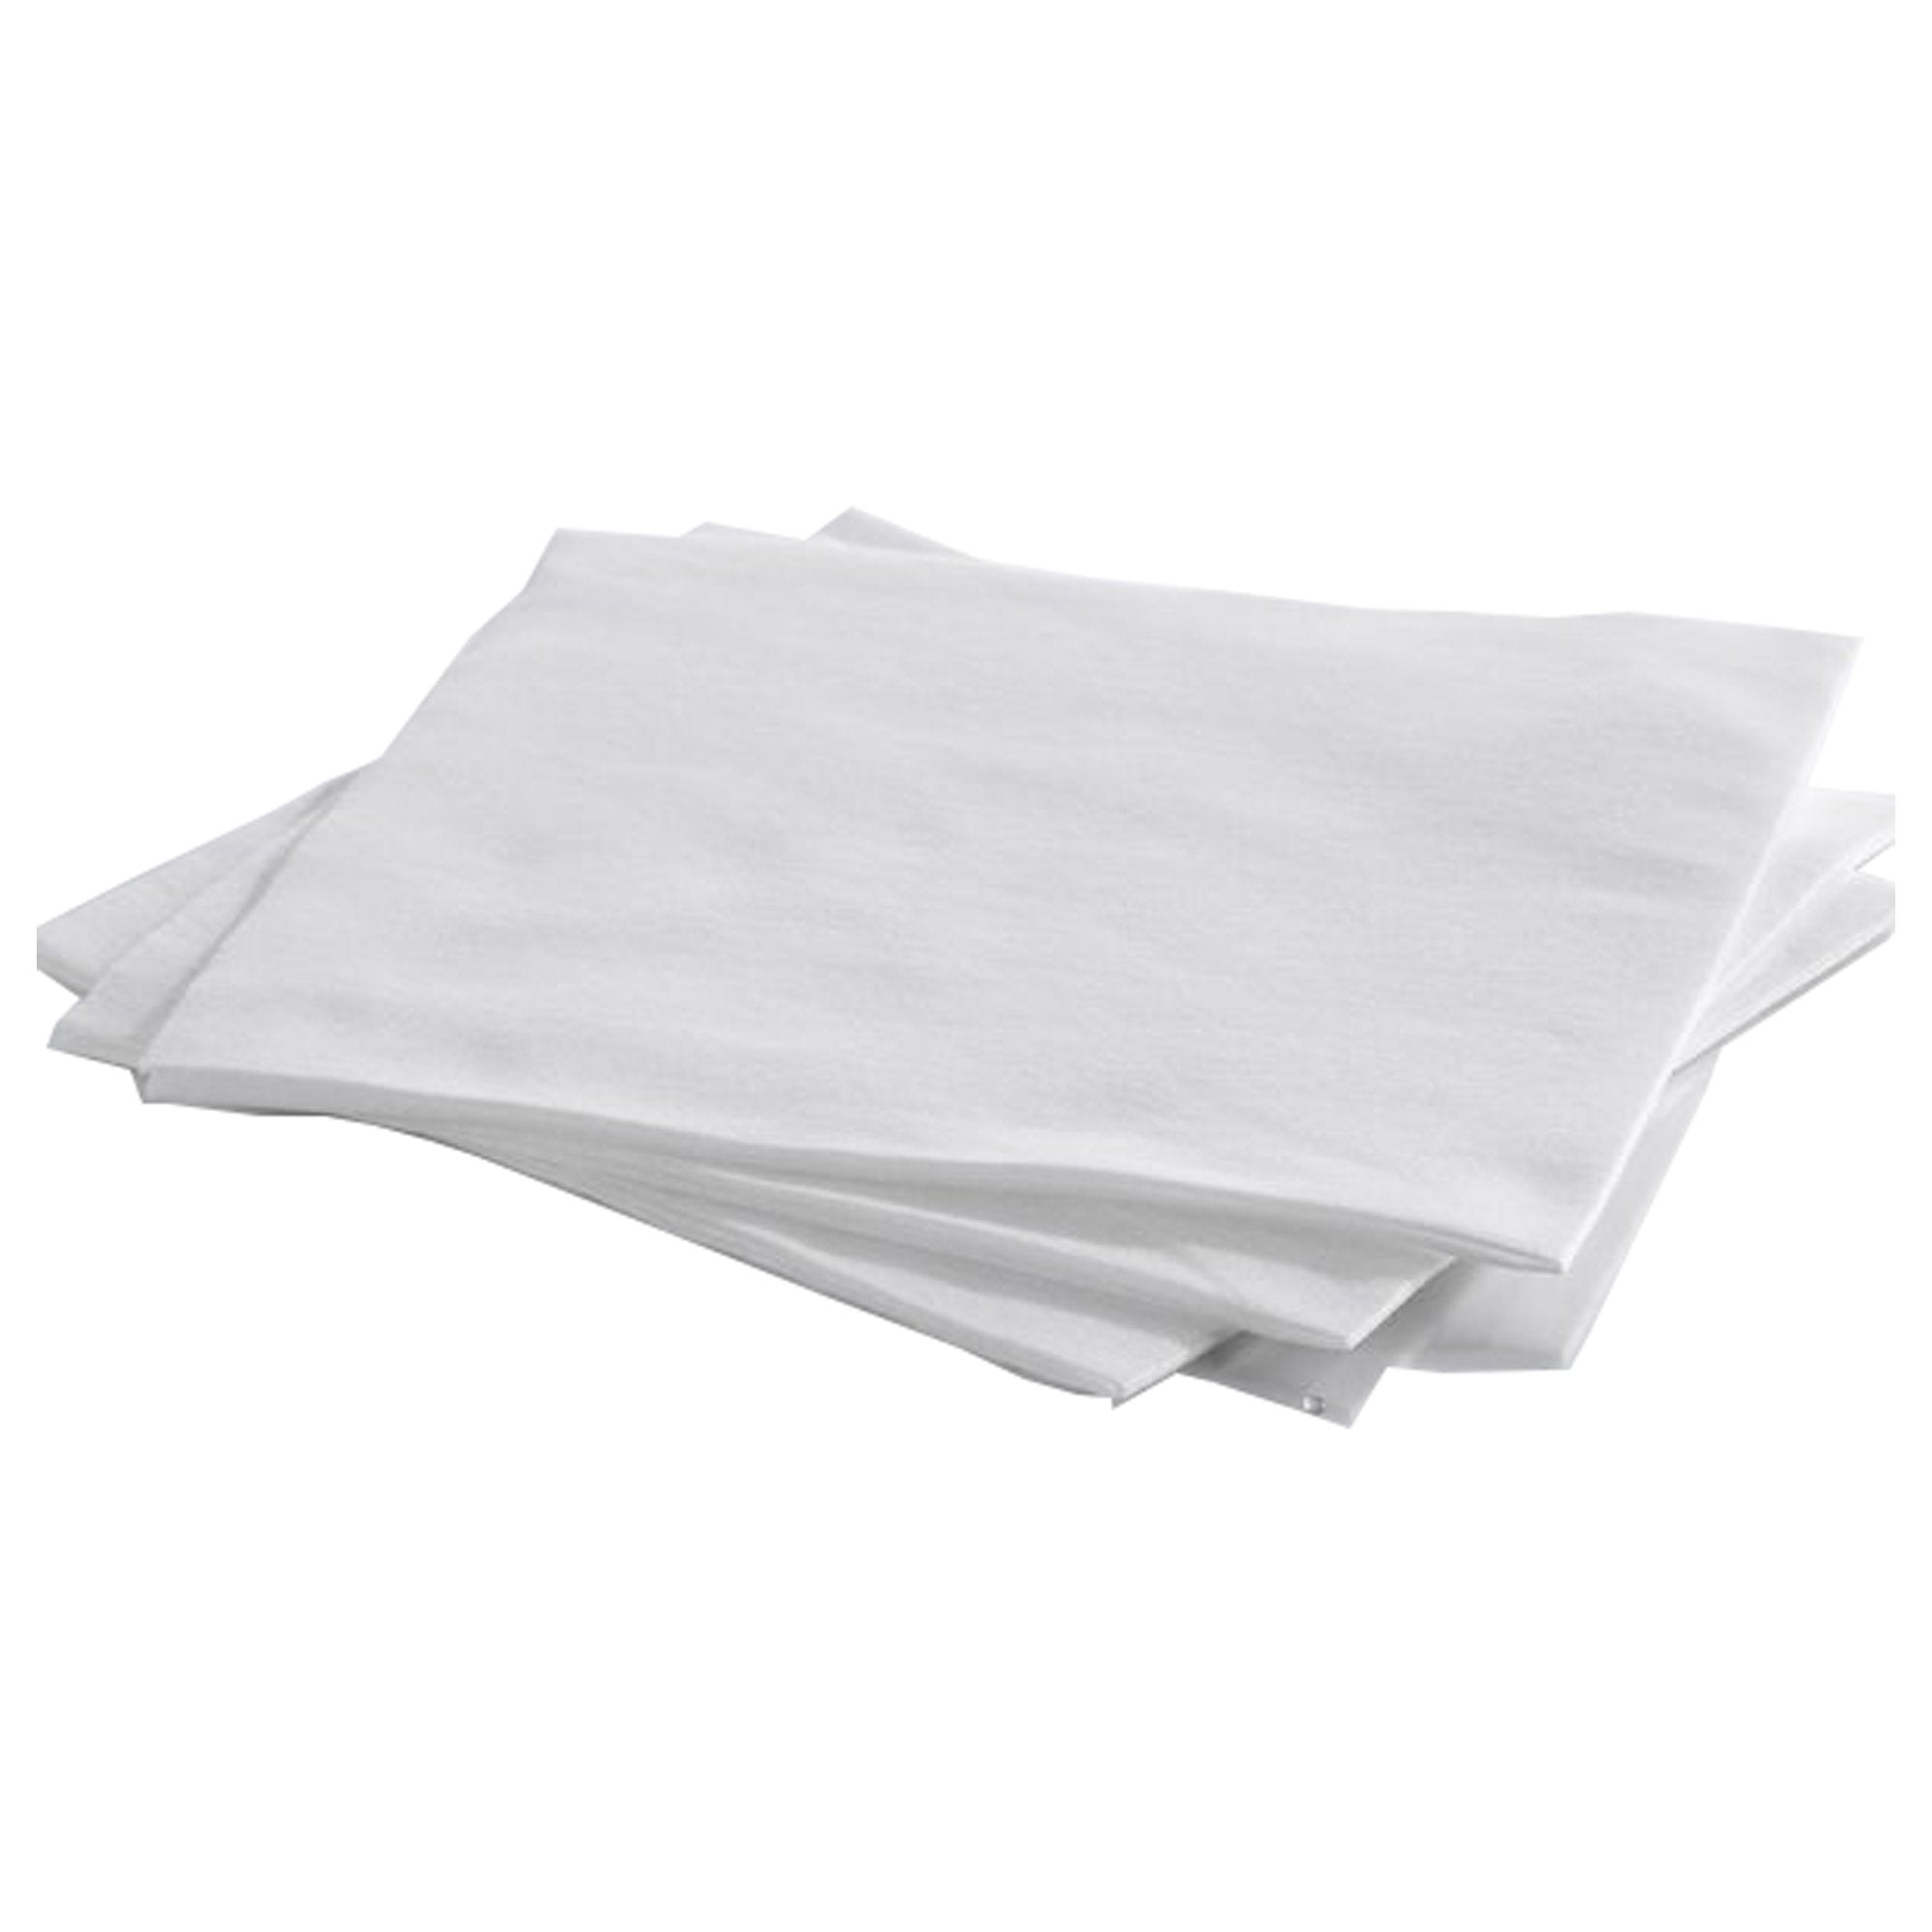 Washcloth Economy 10 X 13-1/2 Inch White Disposable